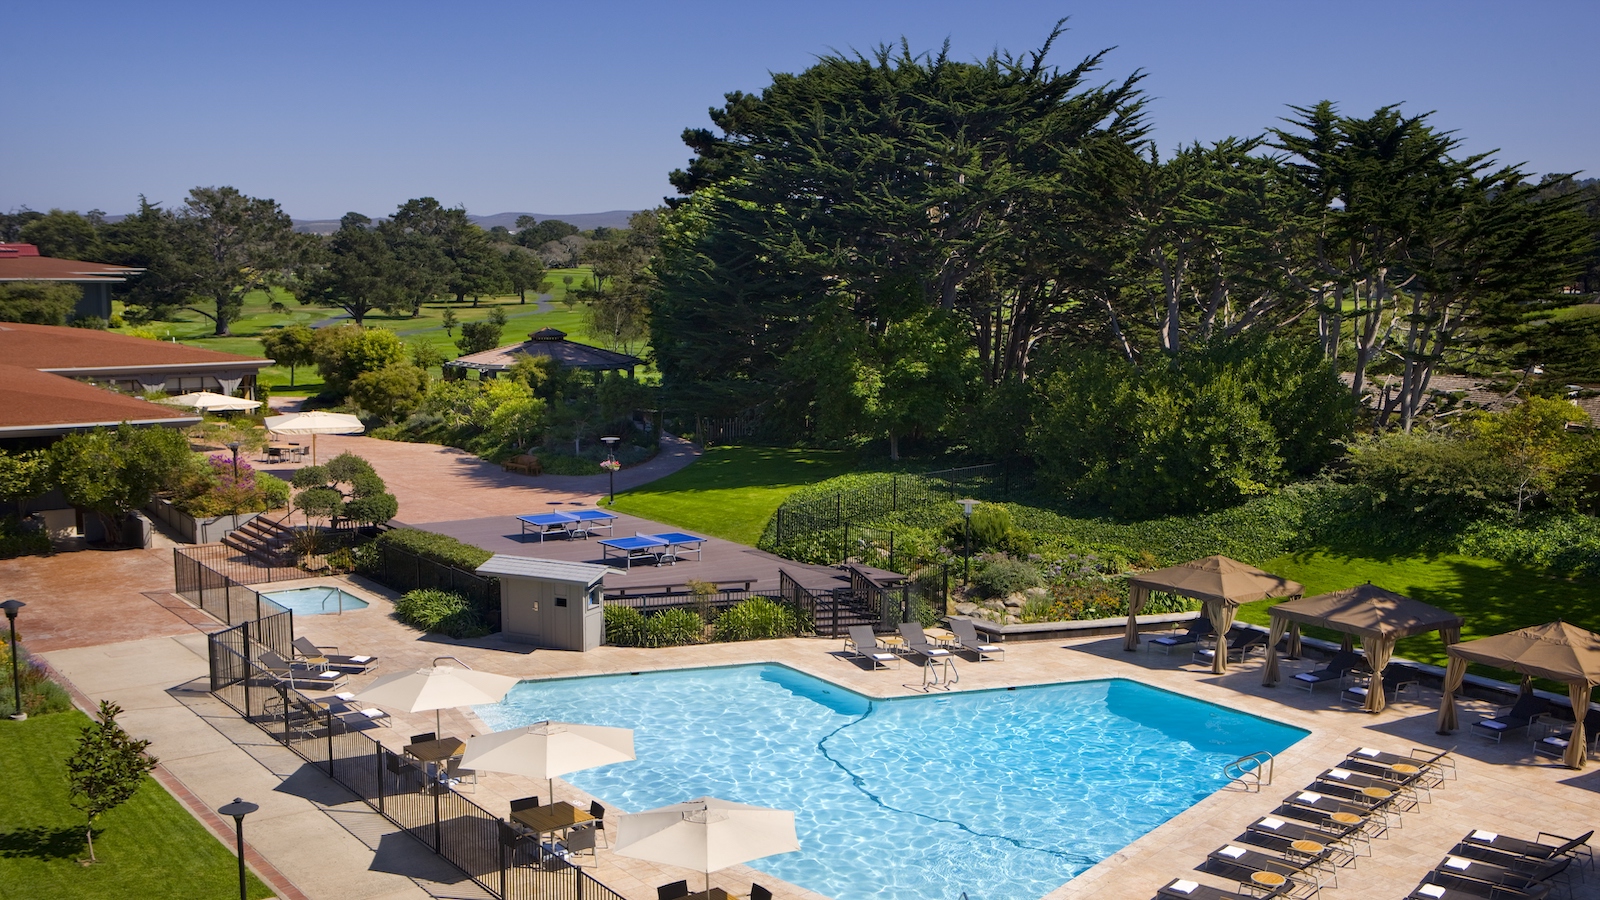 Outdoor pool and chairs at Hyatt Regency Monterey in Monterey, California.